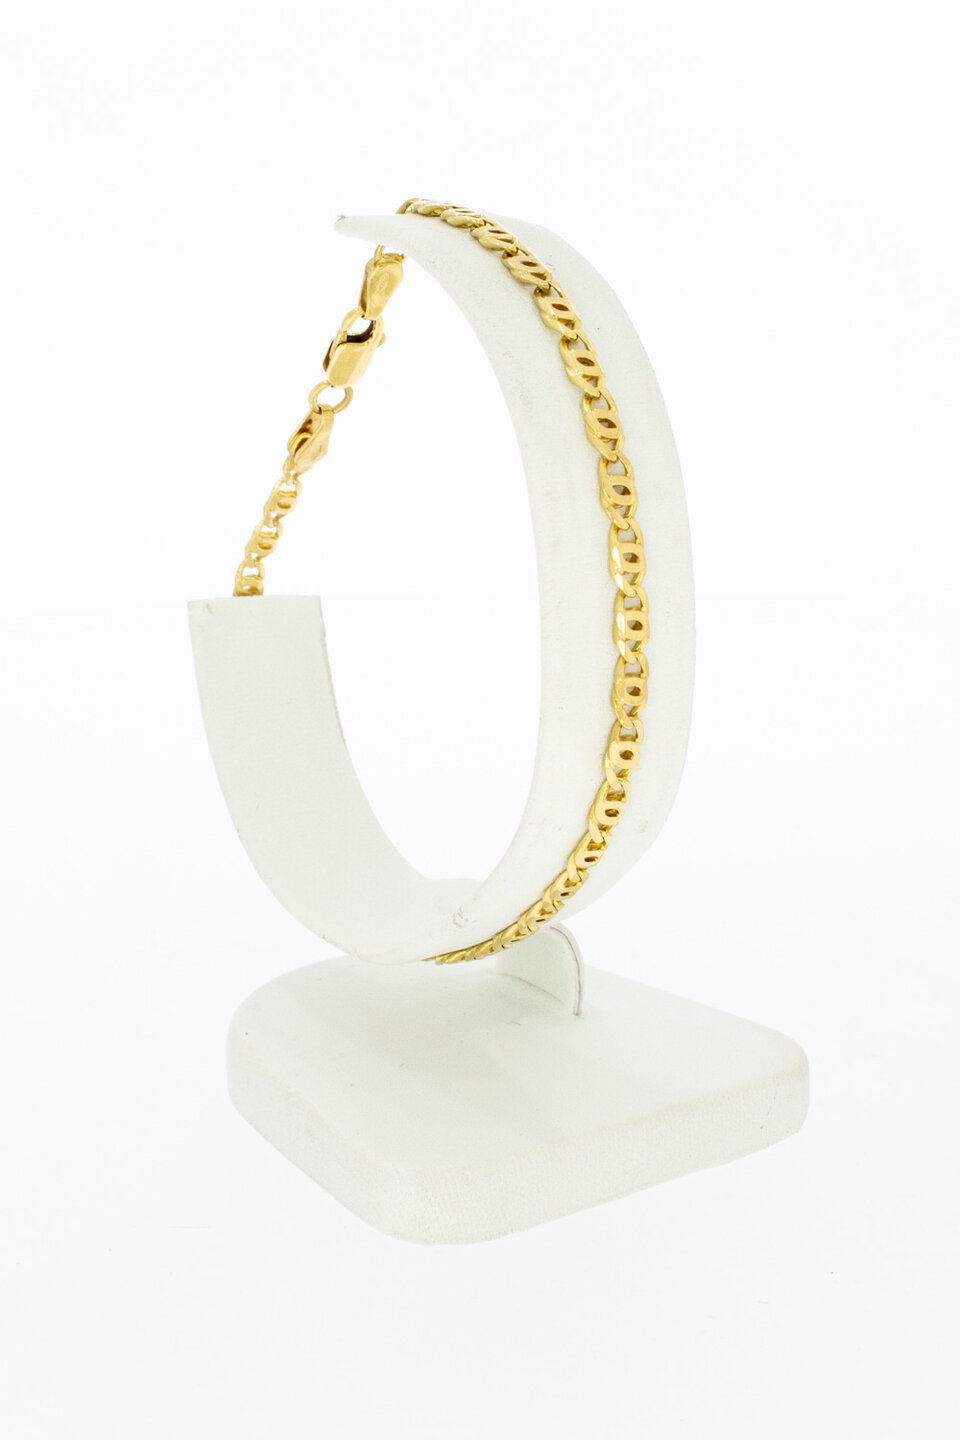 Valkenoog armband 18 Karaat goud - 21,9 cm